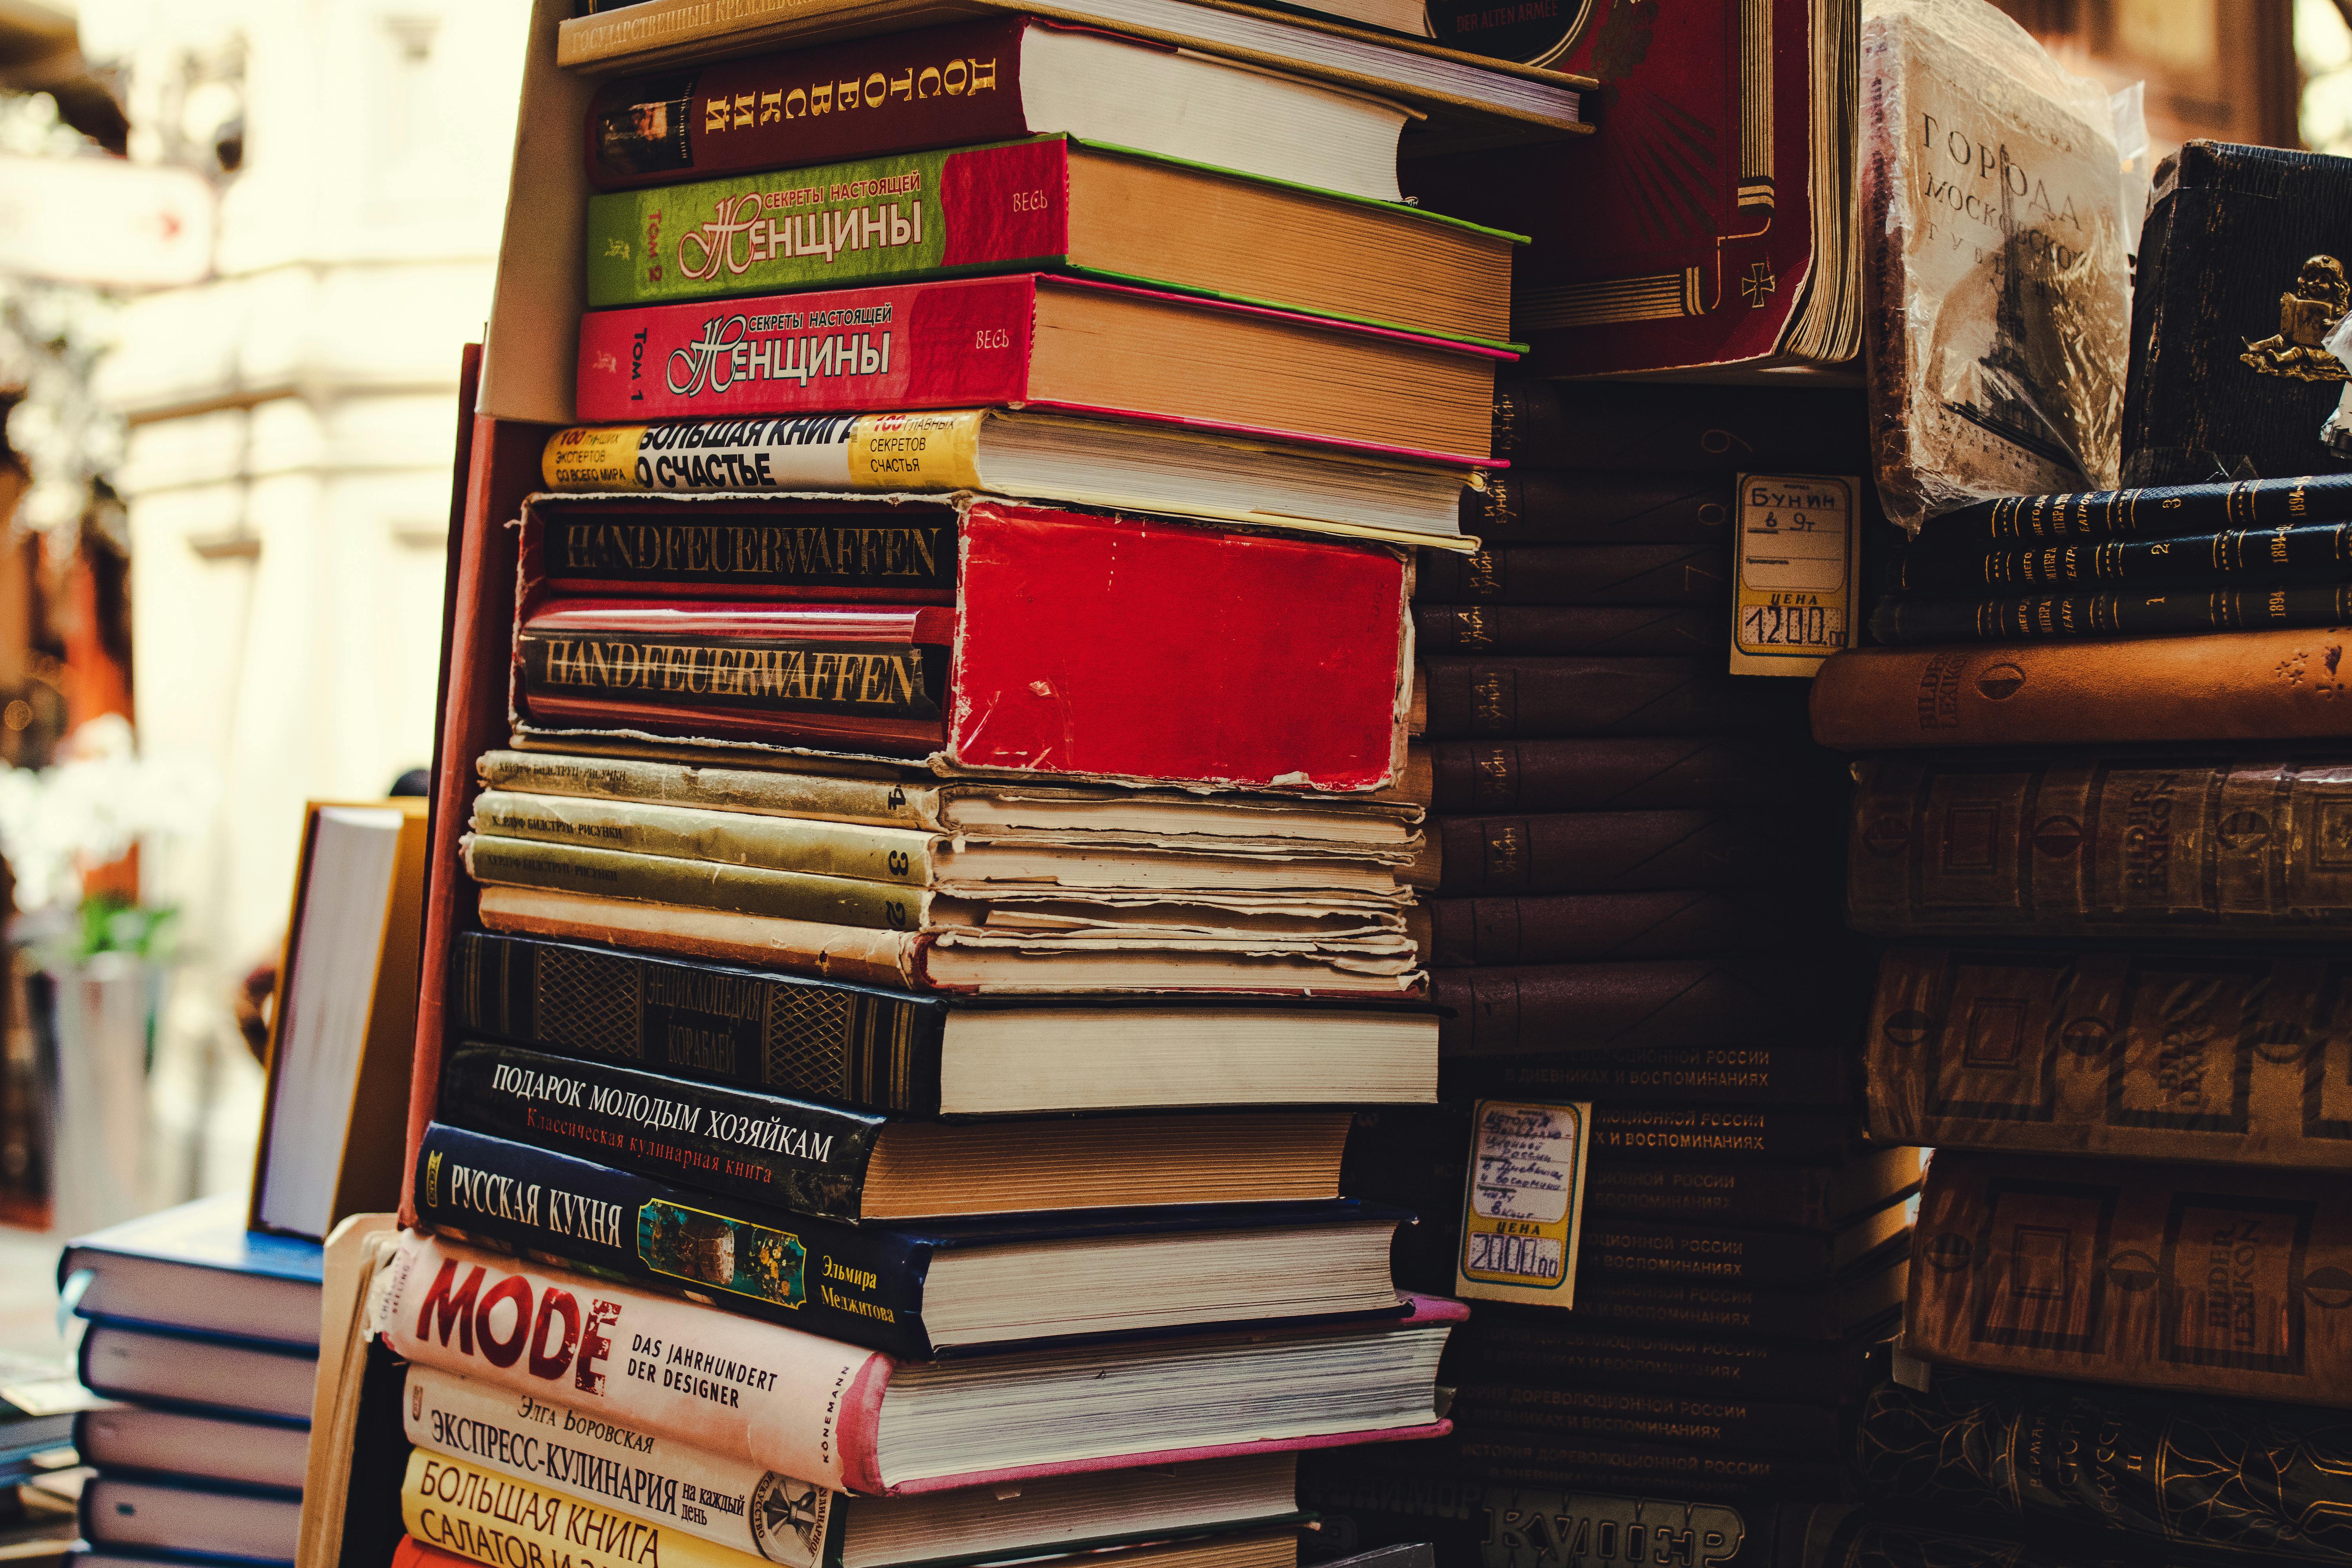 stacks of books